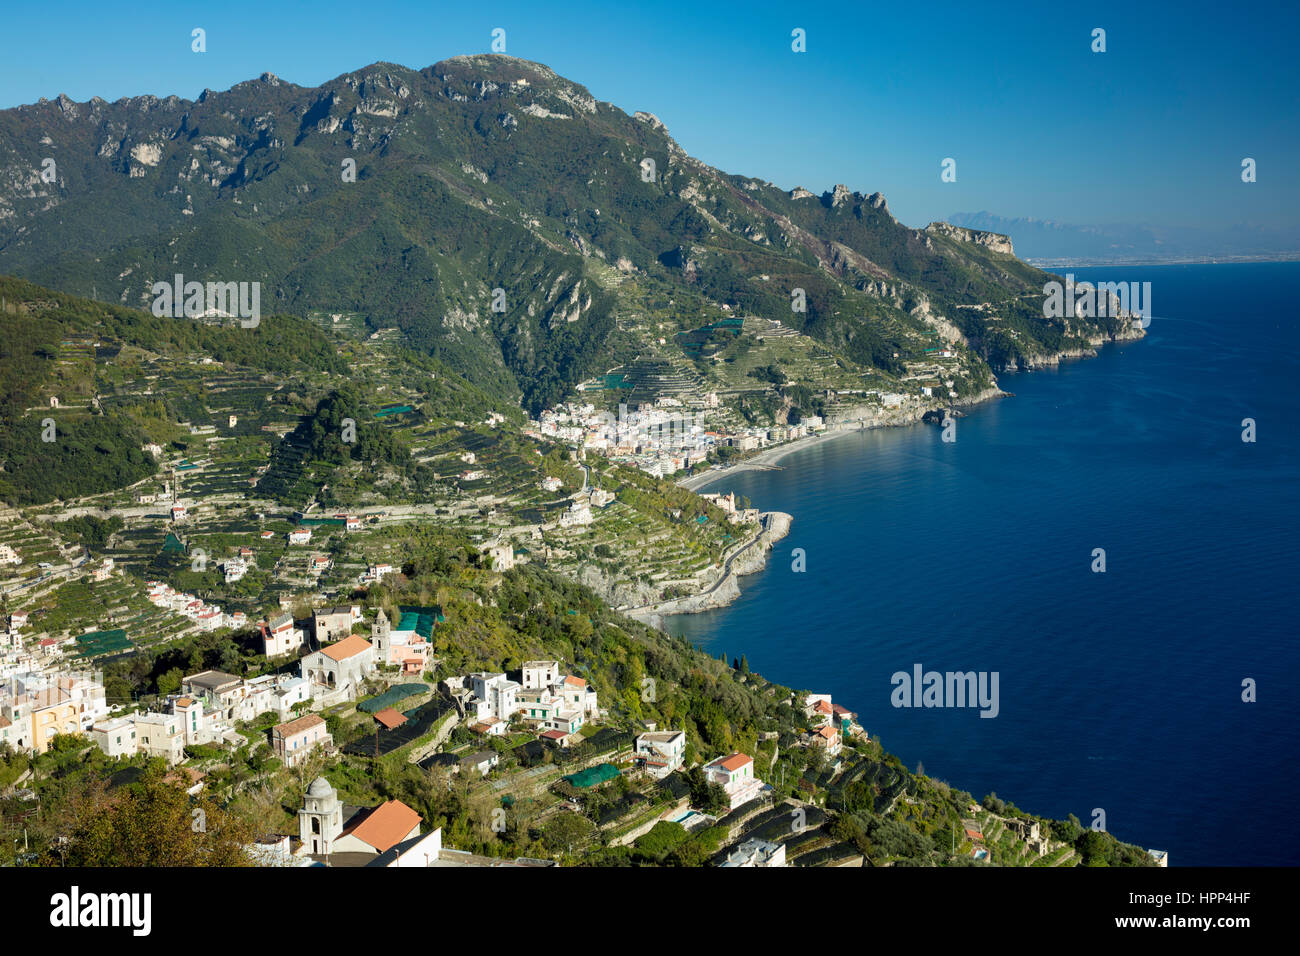 View from Villa Rufolo over looking the Amalfi Coast and the Gulf of Salerno, Ravello, Campania, Italy Stock Photo